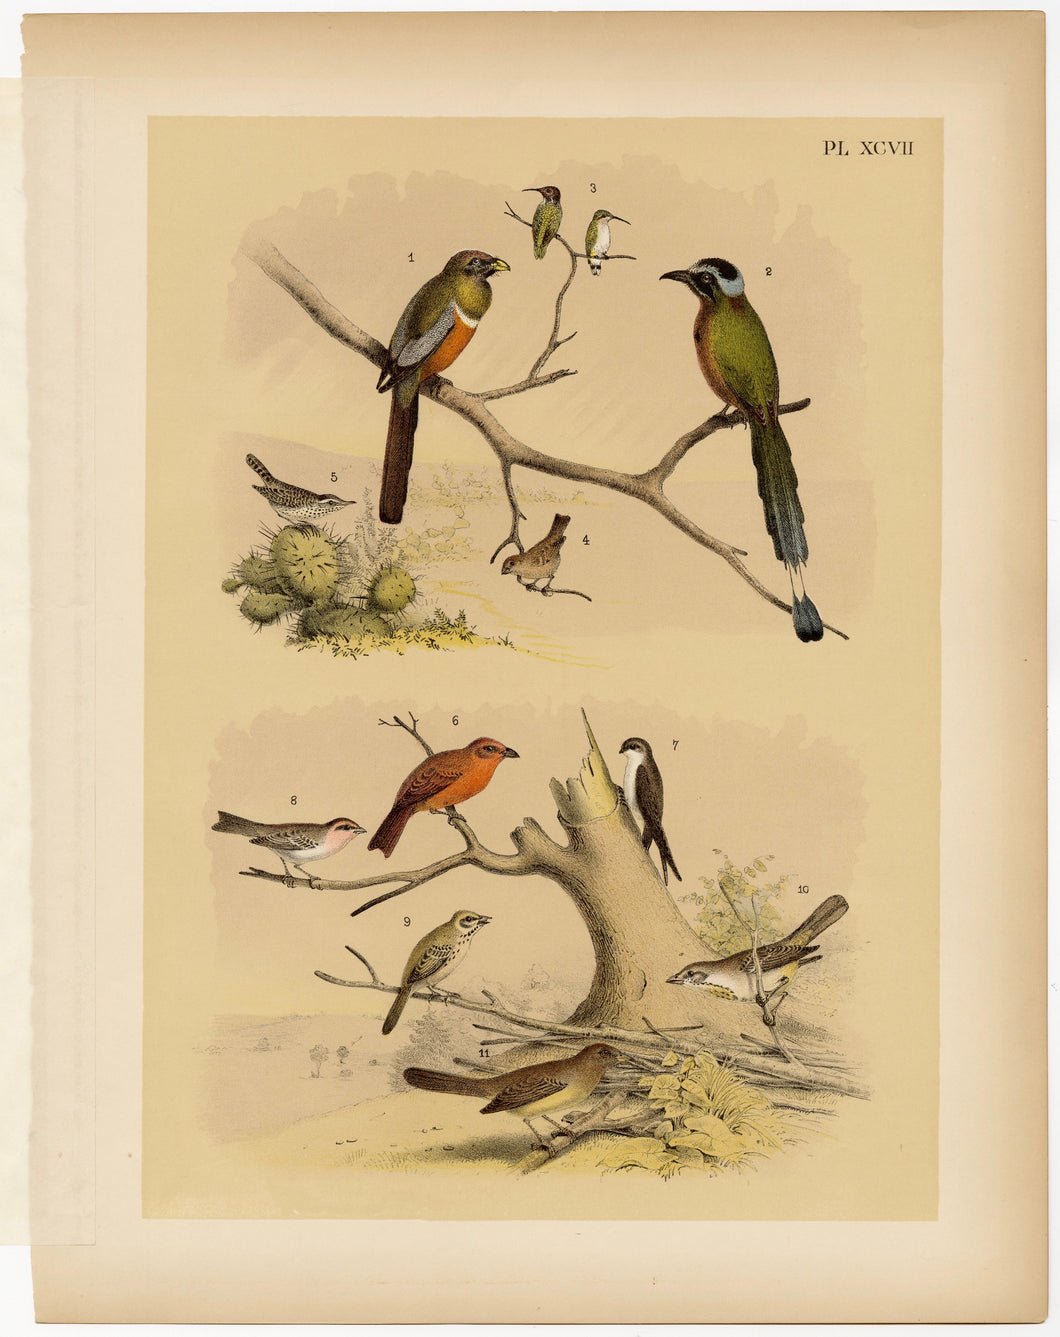 1878 Antique STUDNER'S POPULAR ORNITHOLOGY Original Small Bird Lithographic Plate